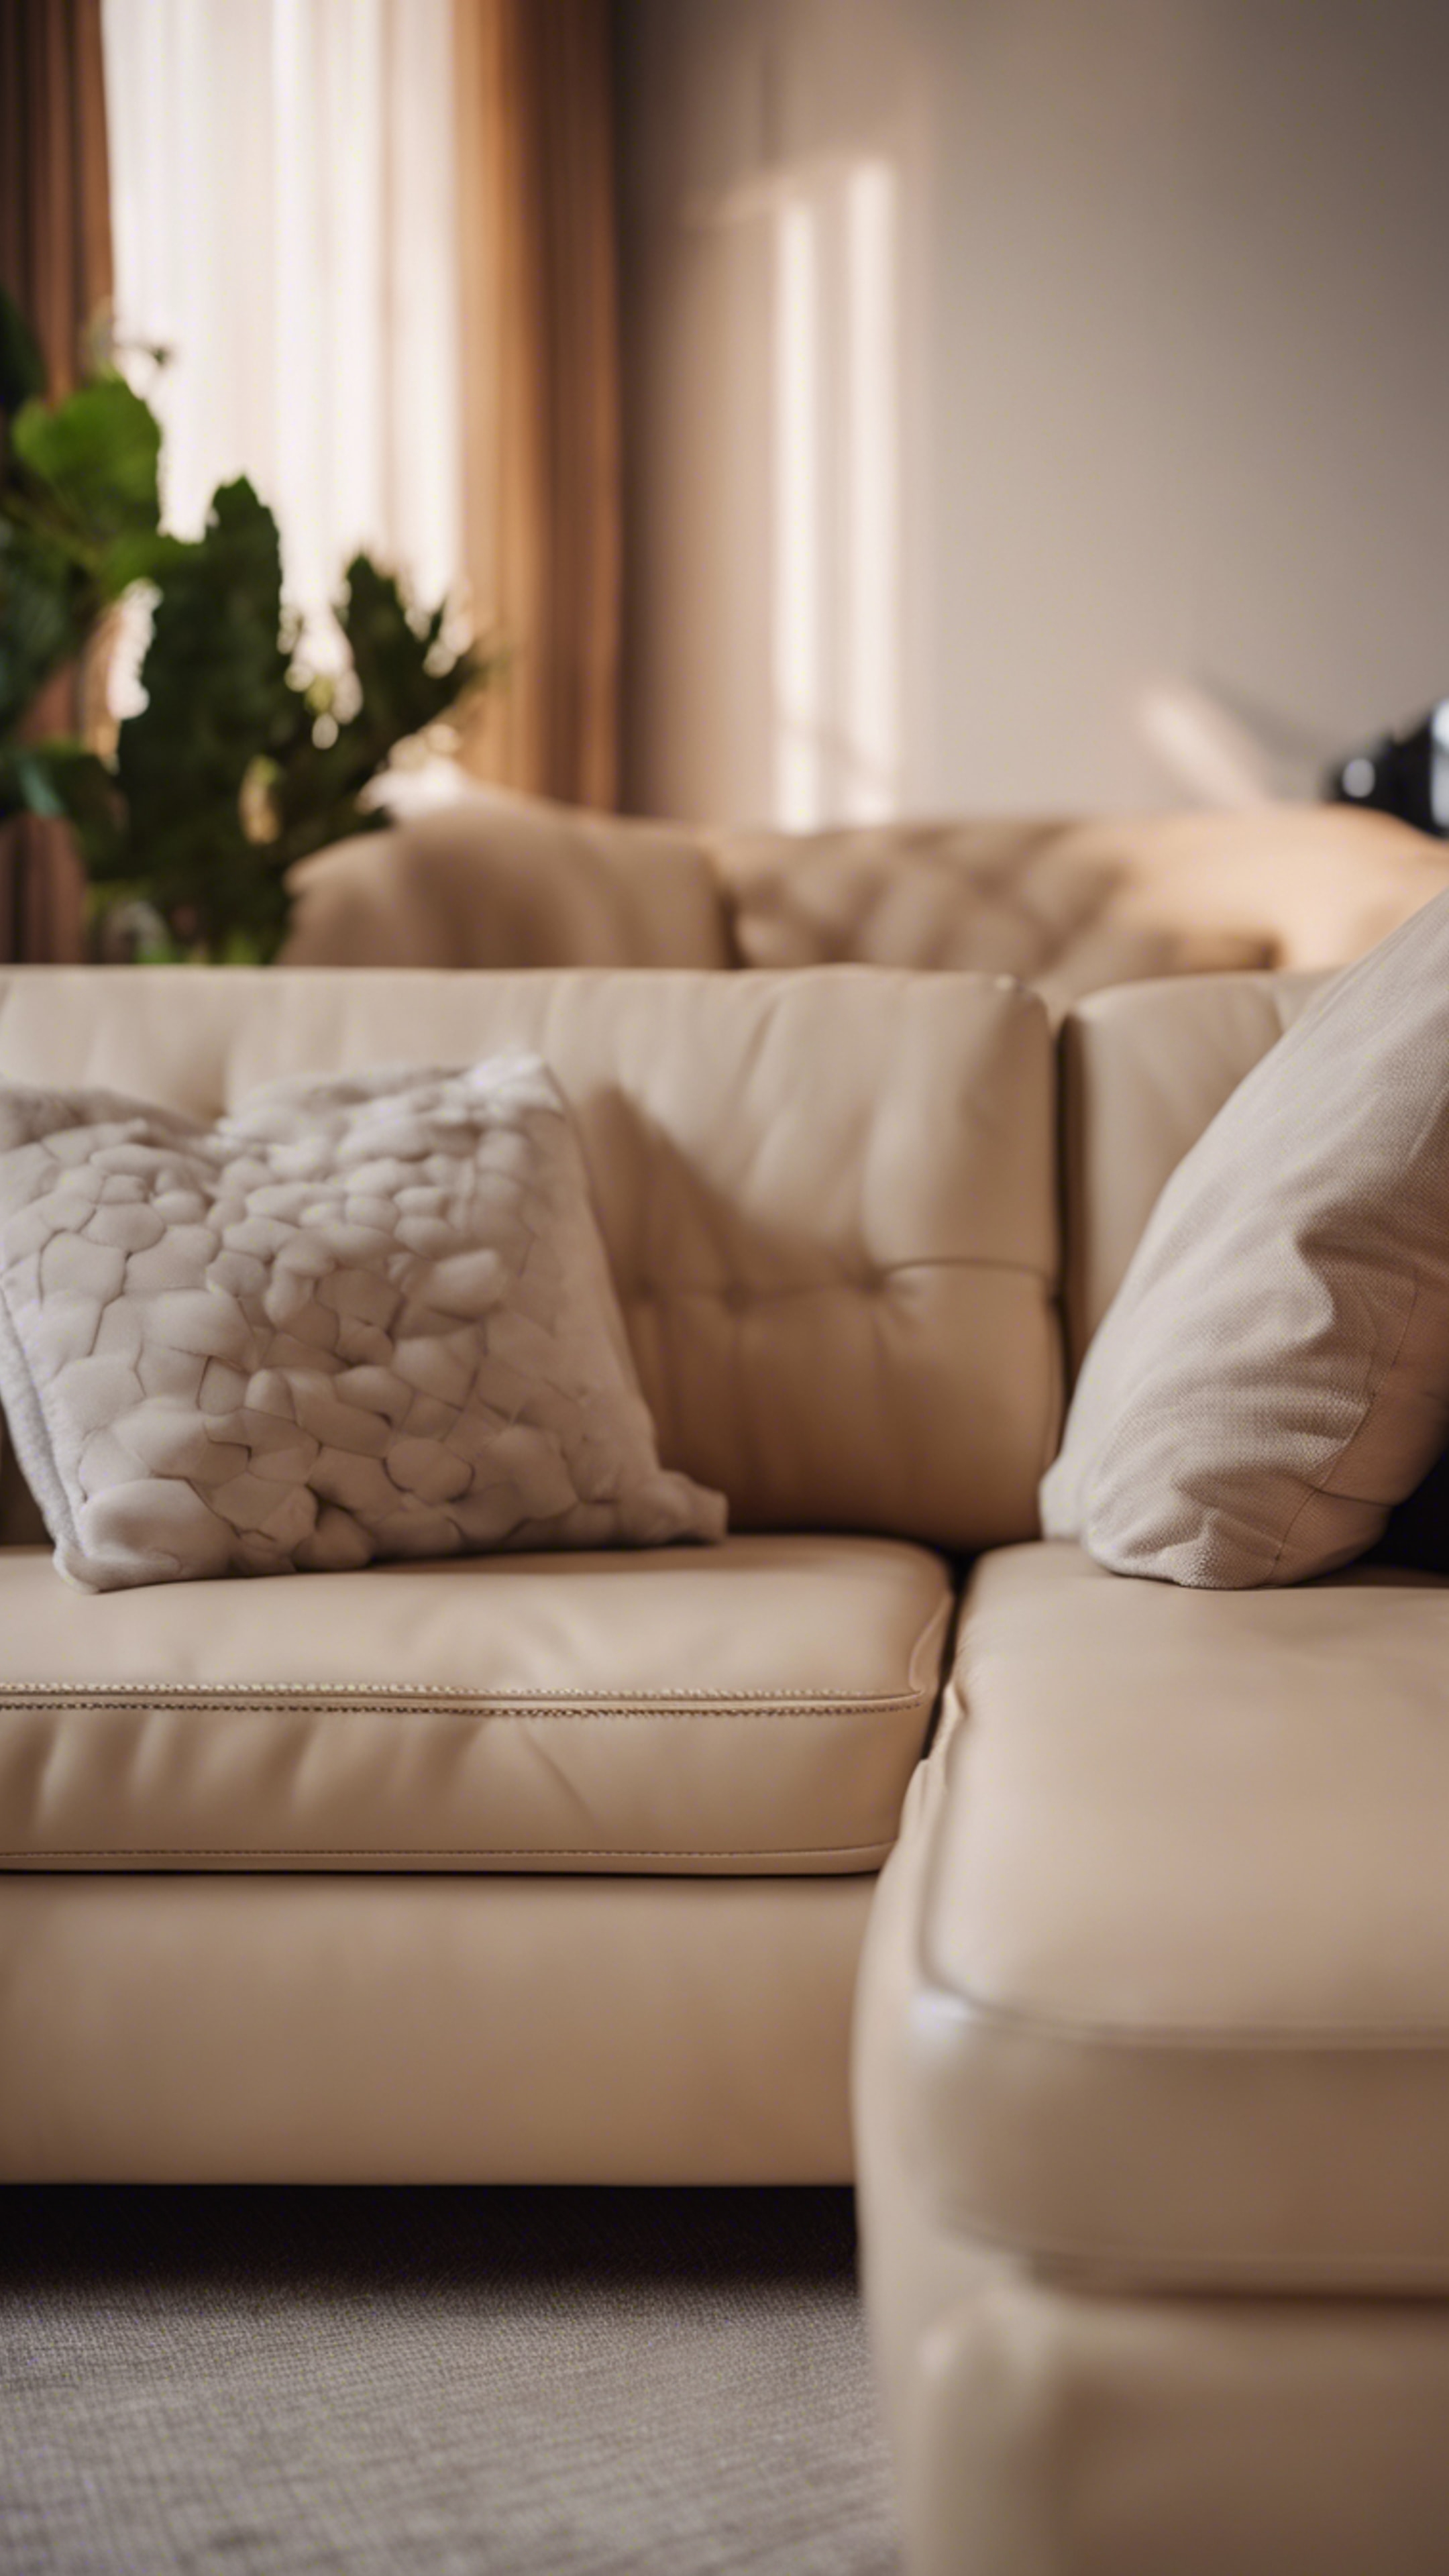 A new, beige leather sofa sitting cozily in a minimalist living room with warm lighting. Divar kağızı[50f9d766dce04faf8d3f]